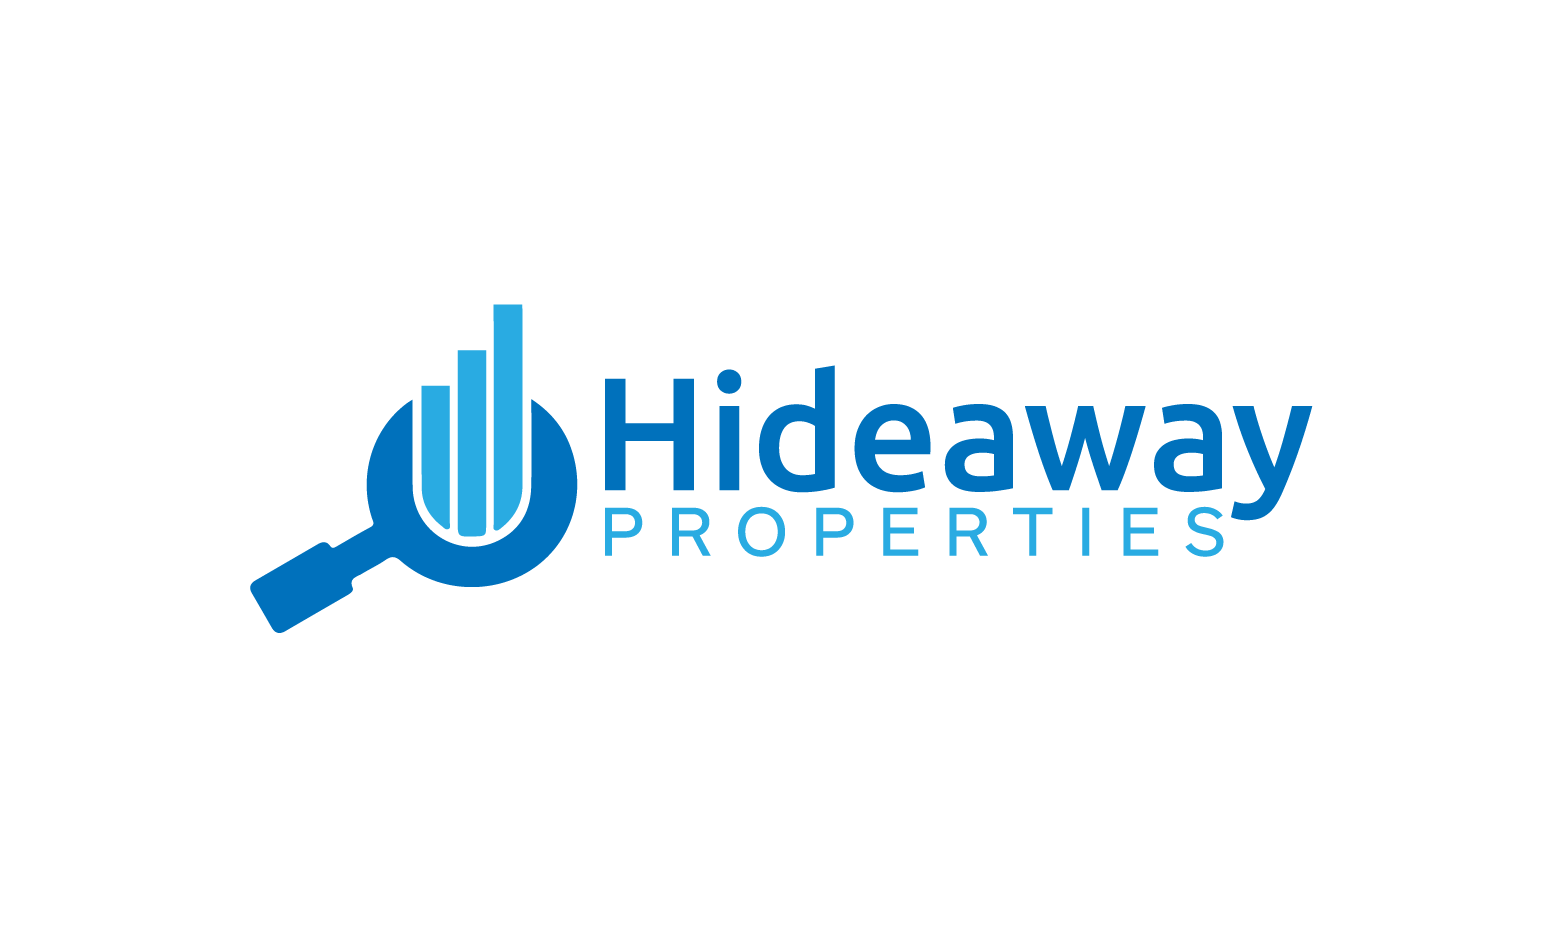 HideawayProperties.com - Creative brandable domain for sale